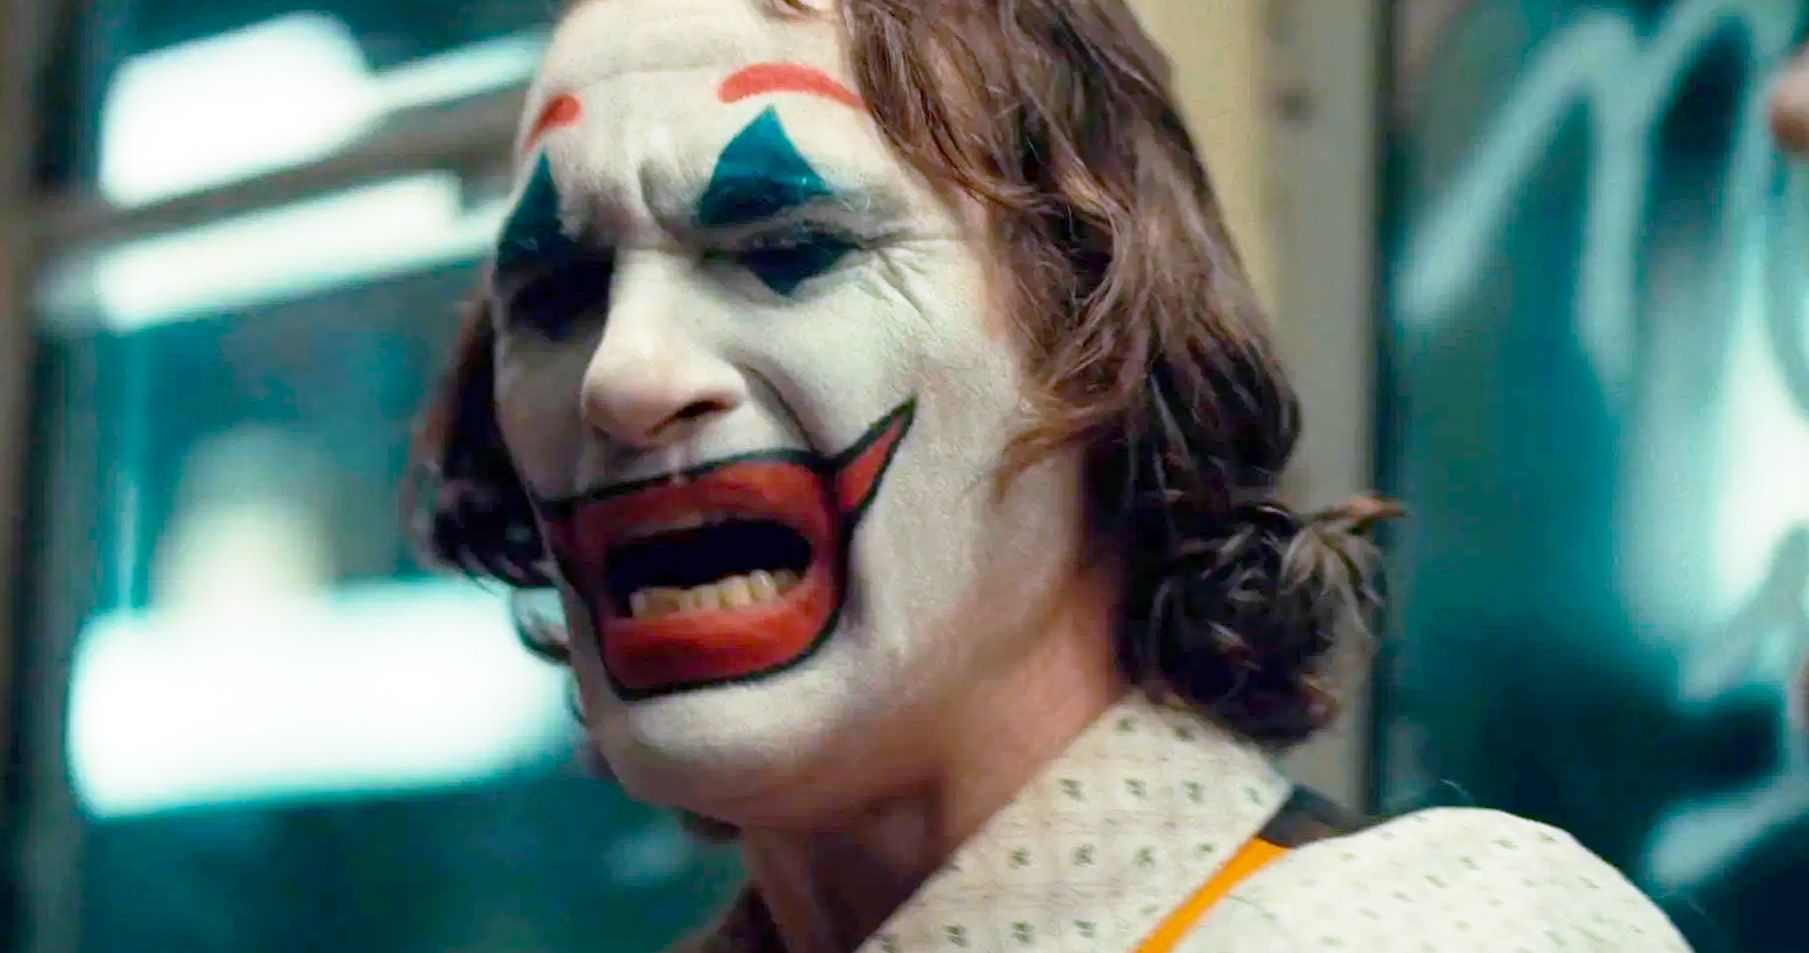 Watch Joaquin Phoenix Cuss Out Joker Cinematographer in Set Outtake